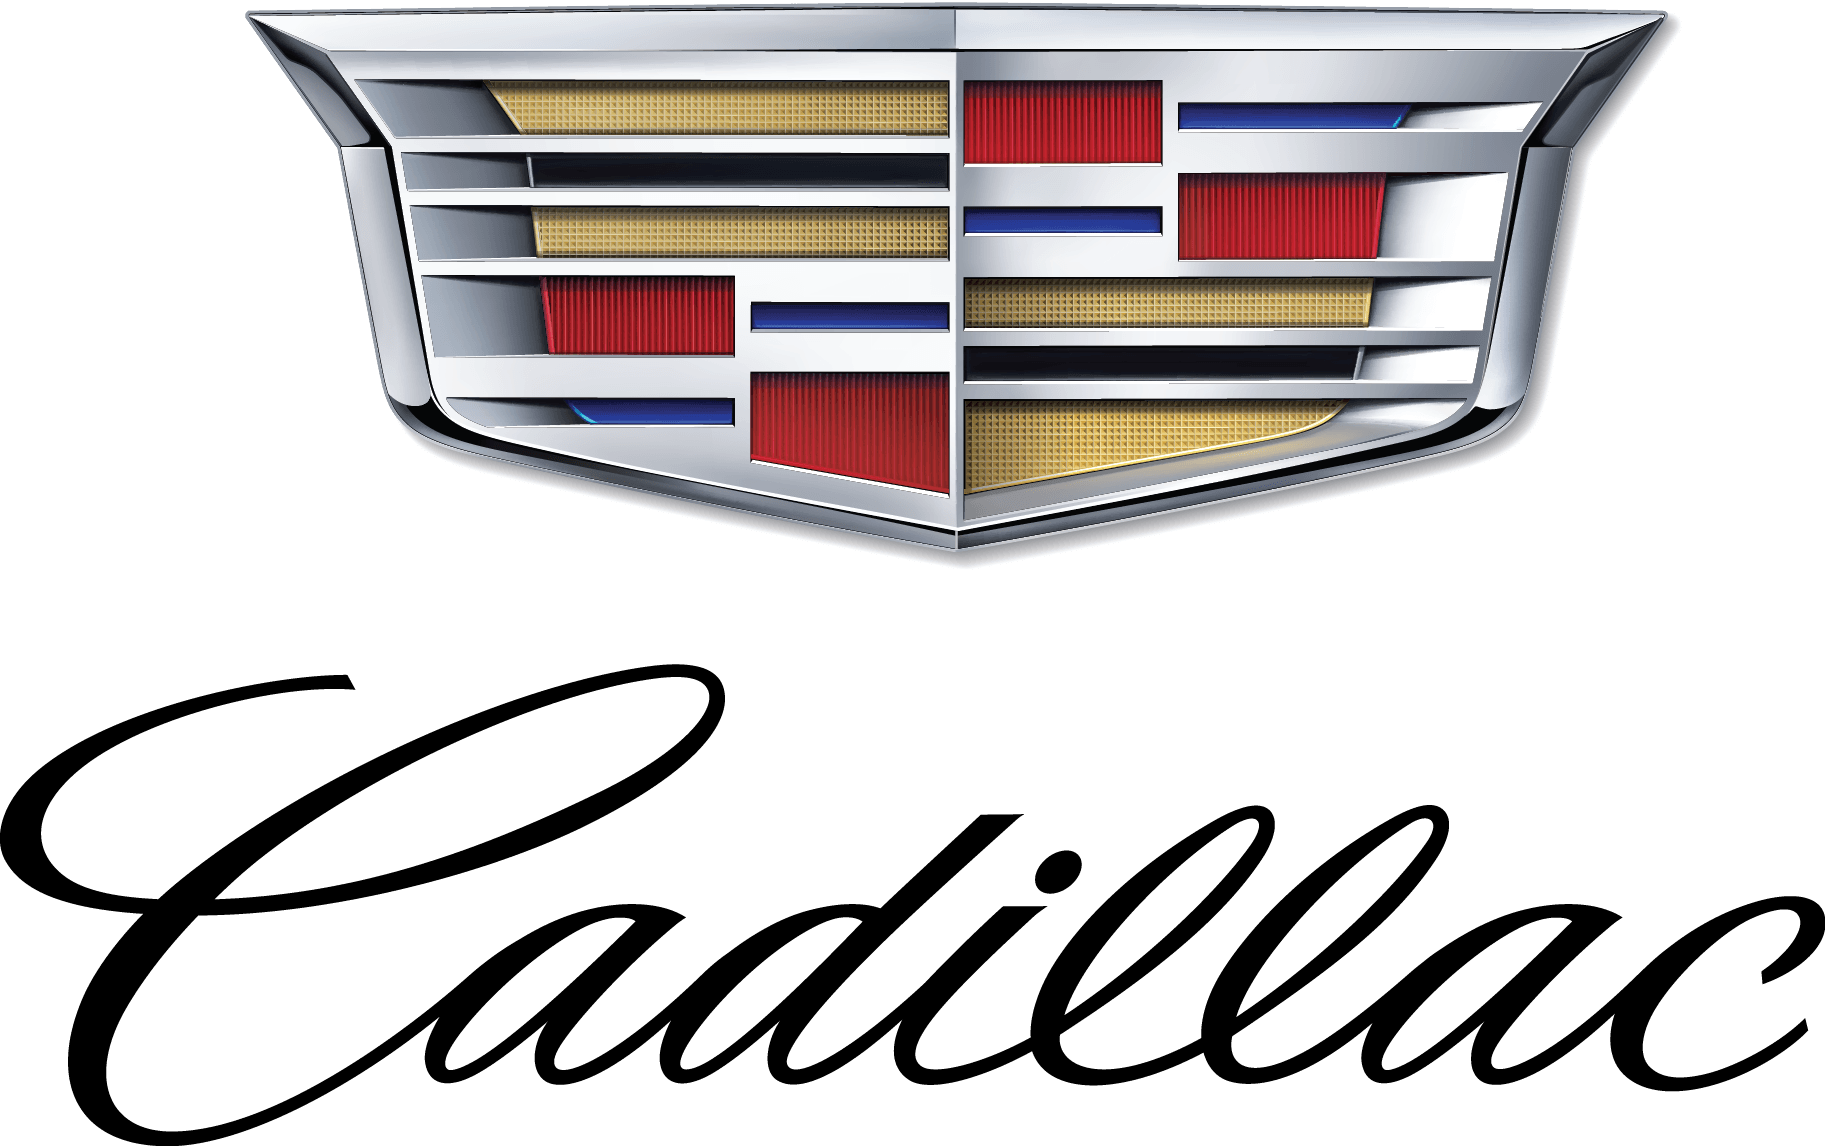 2014 New Cadillac Logo - Explore New Inventory at Serra of Jackson in Jackson, TN | Serving ...